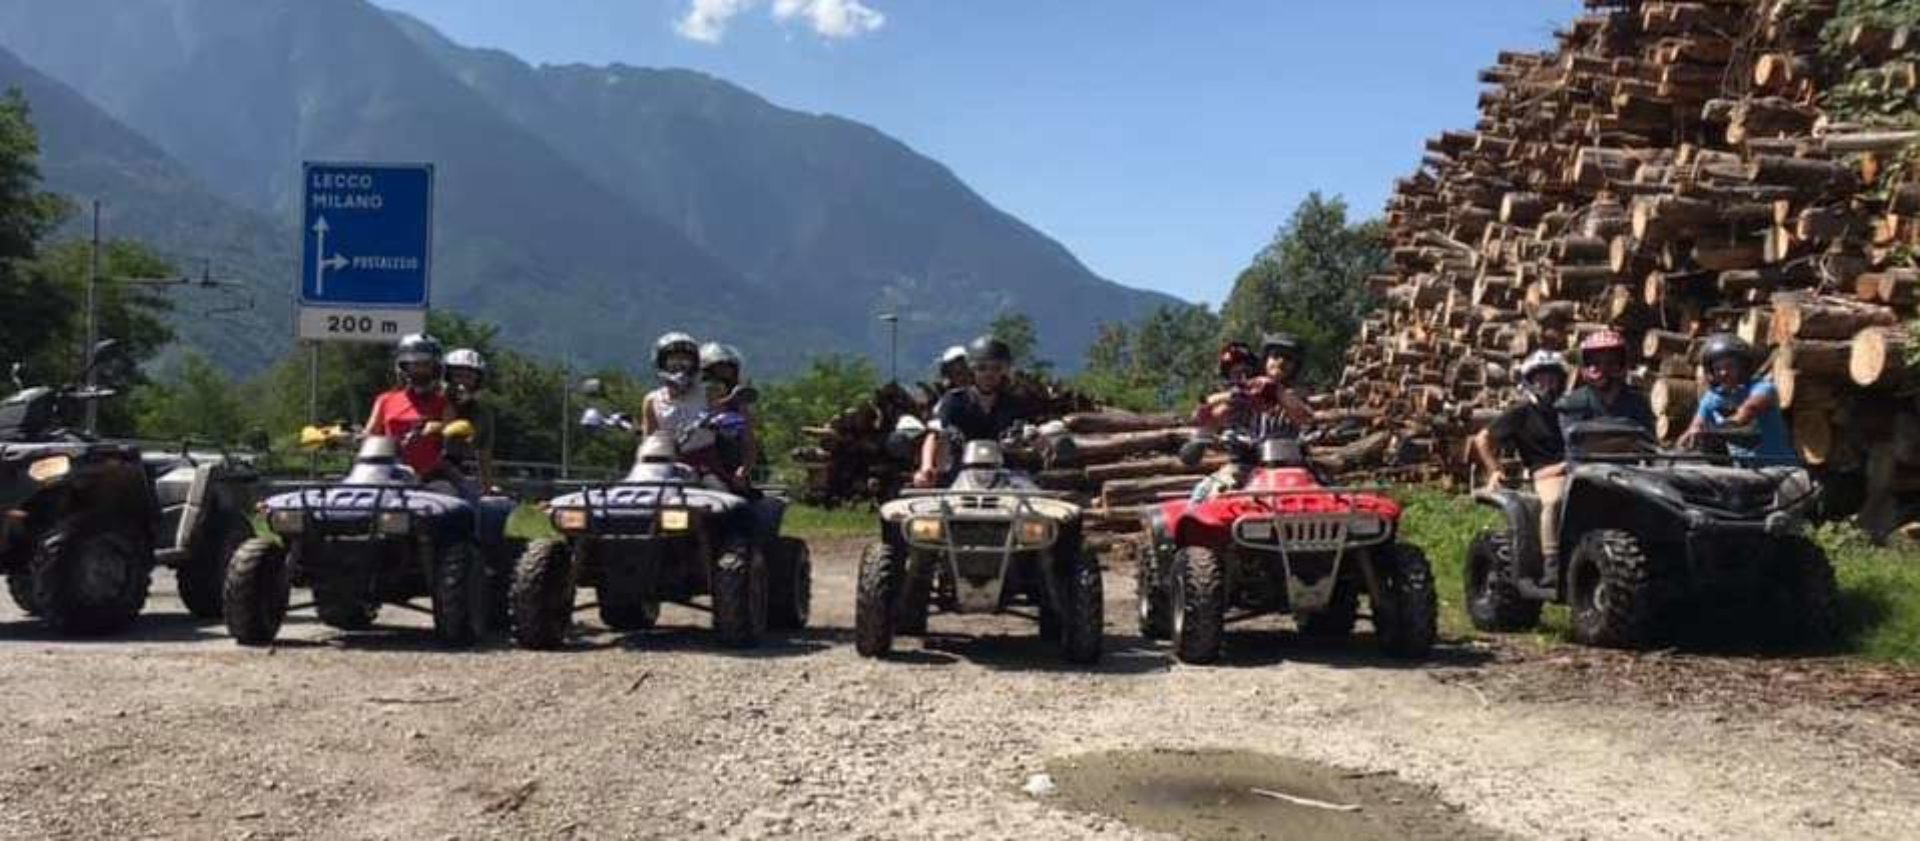 ATV Tours Valtellina